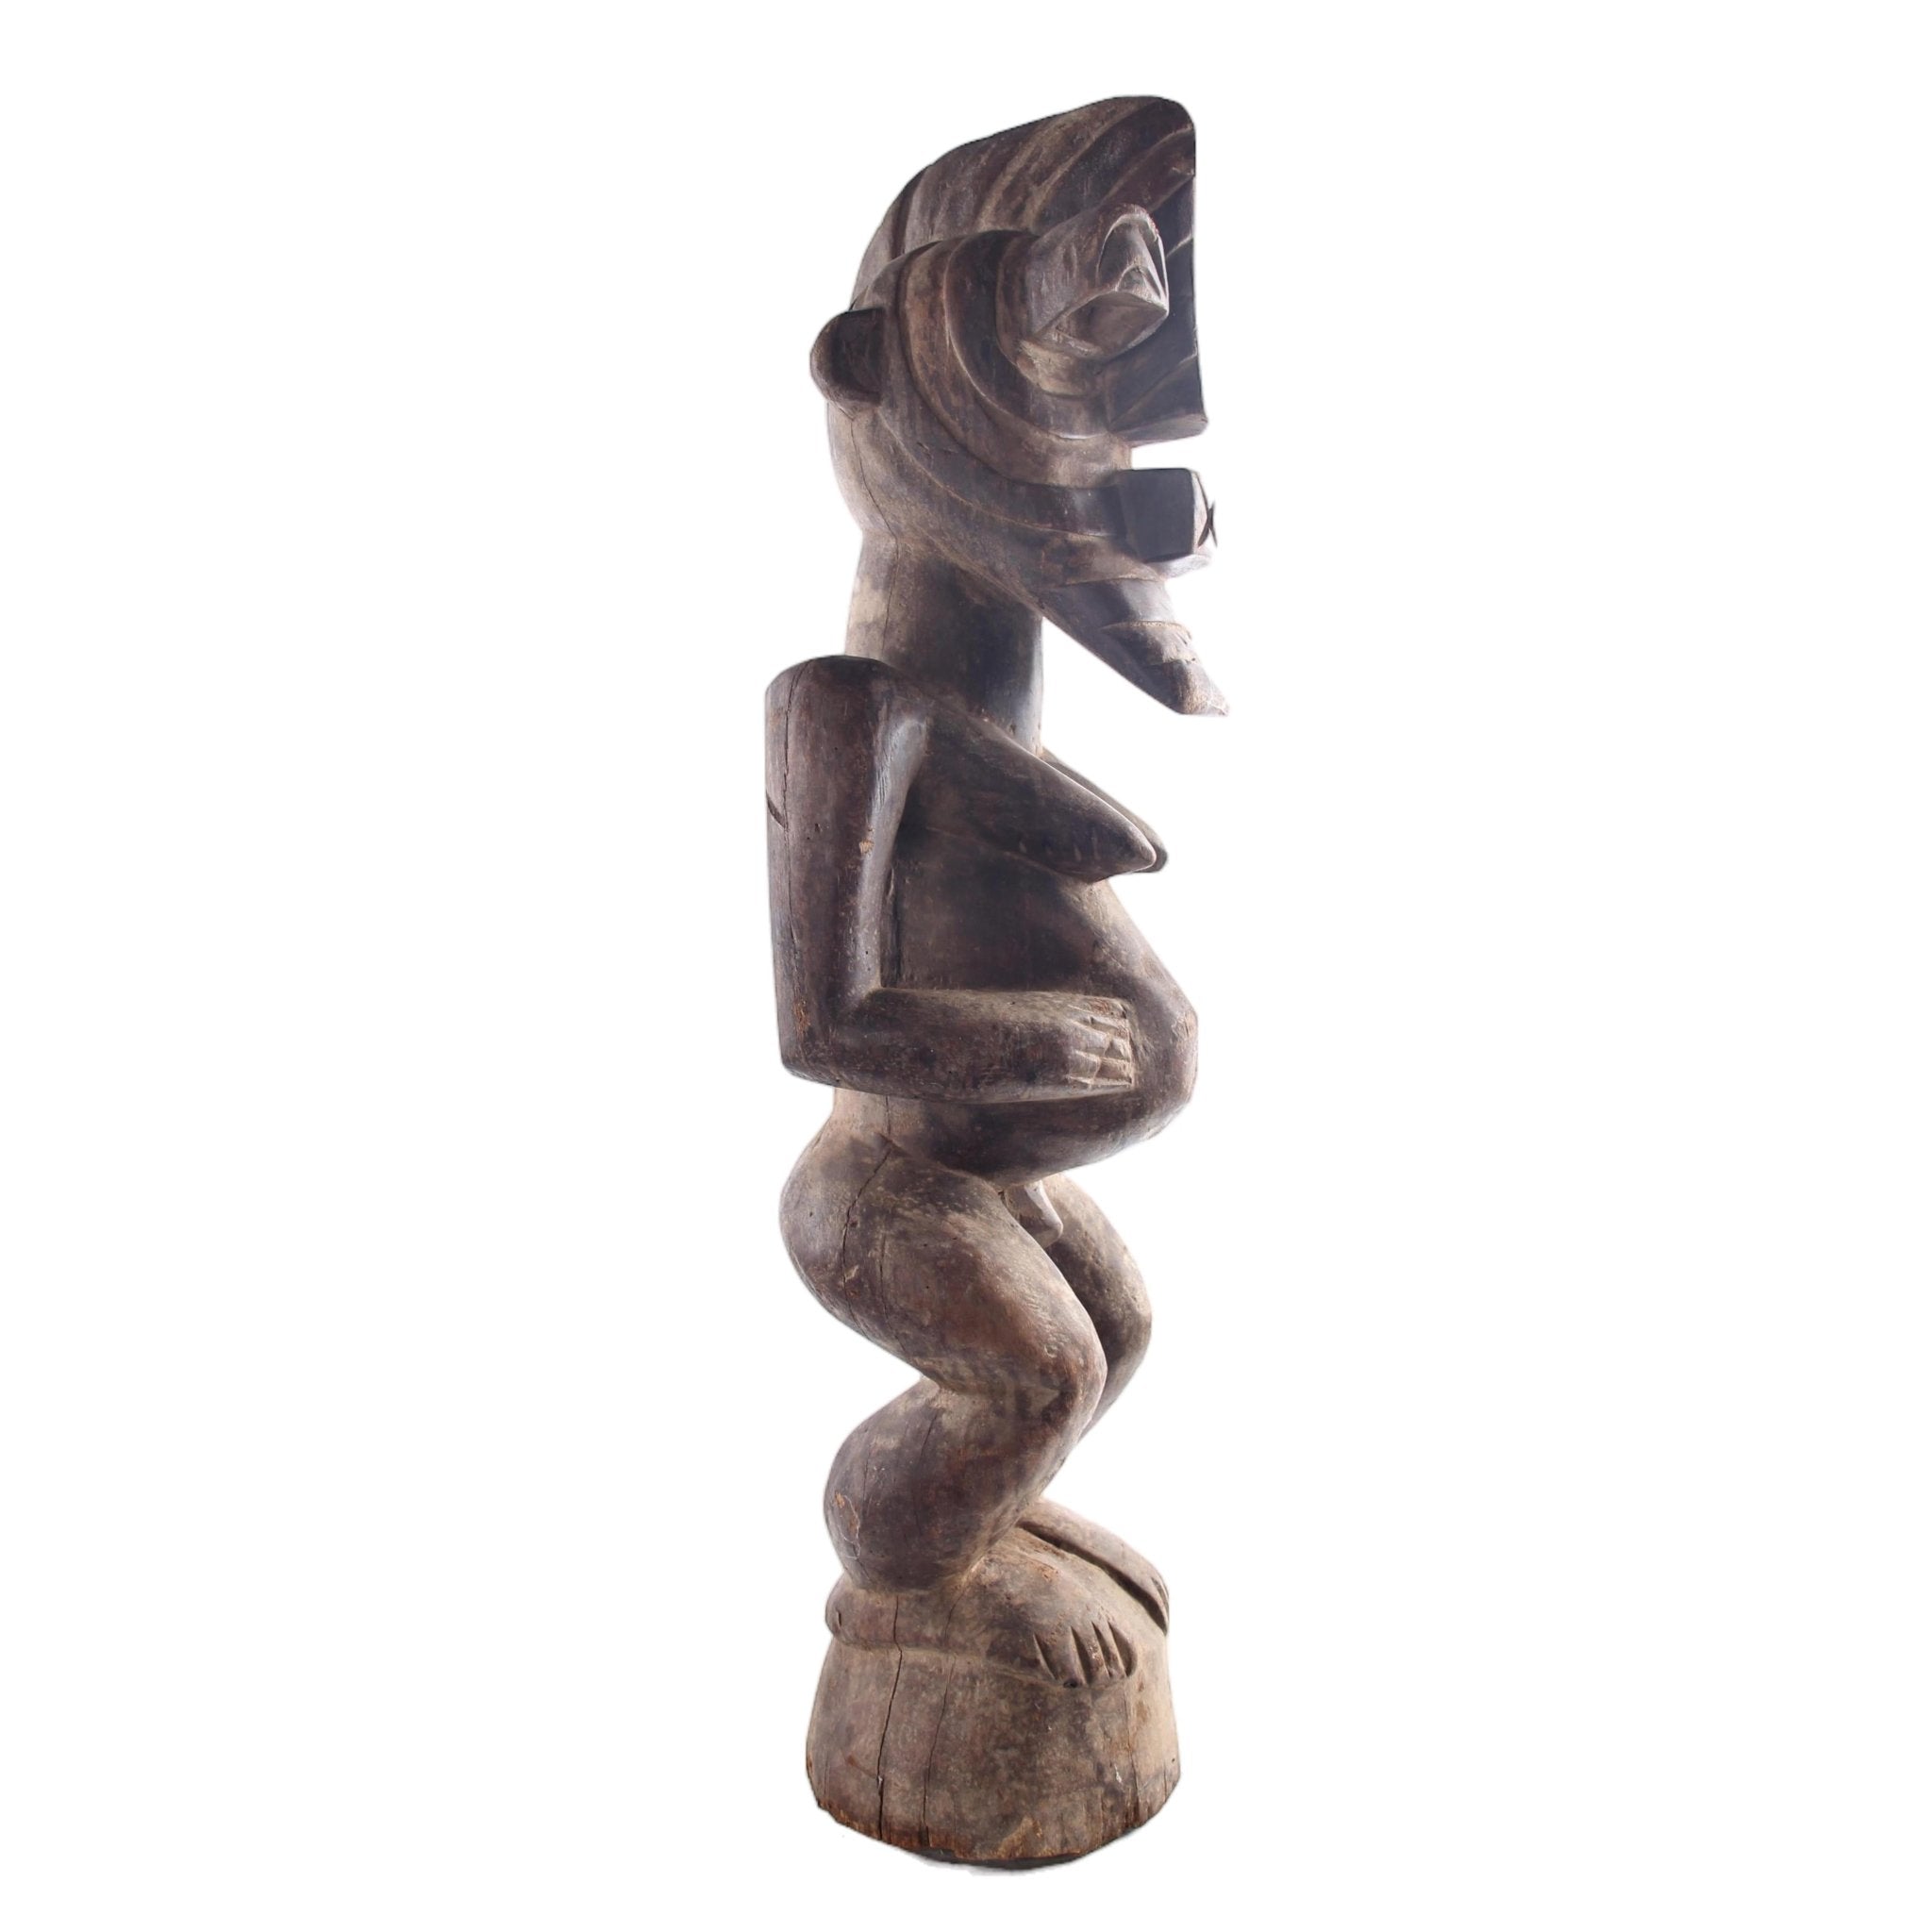 Basonge/Songye Tribe Figurine ~28.0" Tall - African Angel Art - Figurine